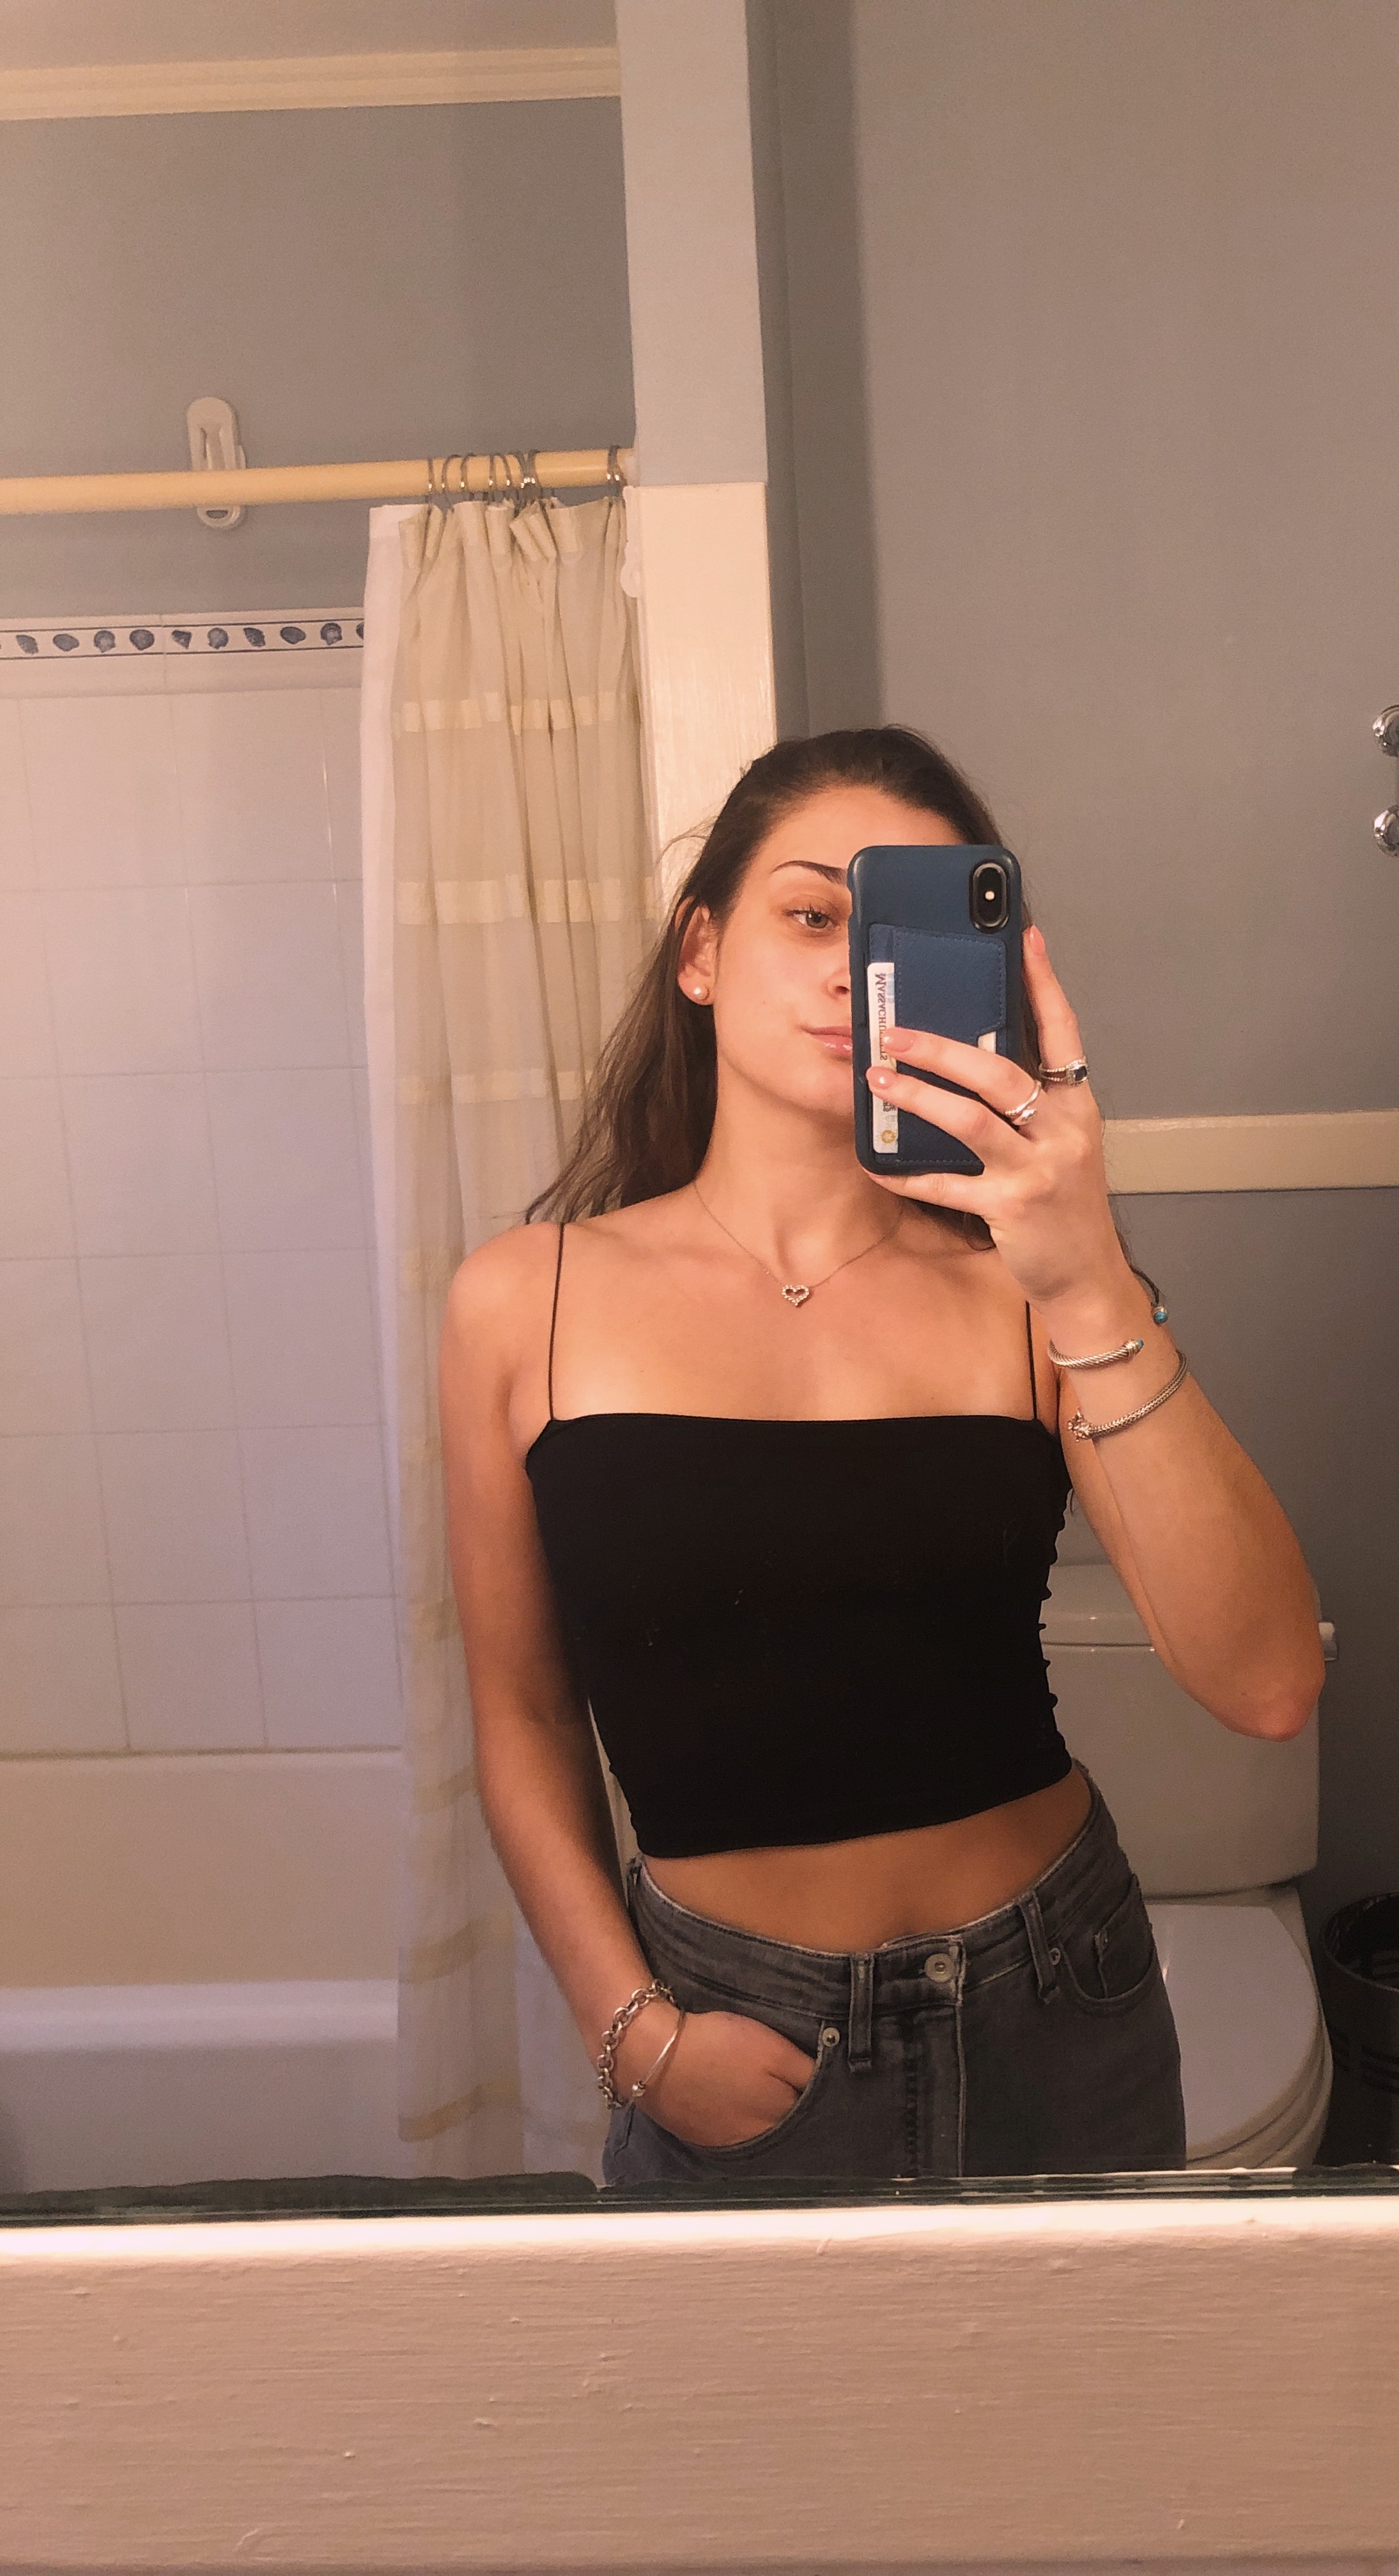 shower room selfie 2020 xxx video pic